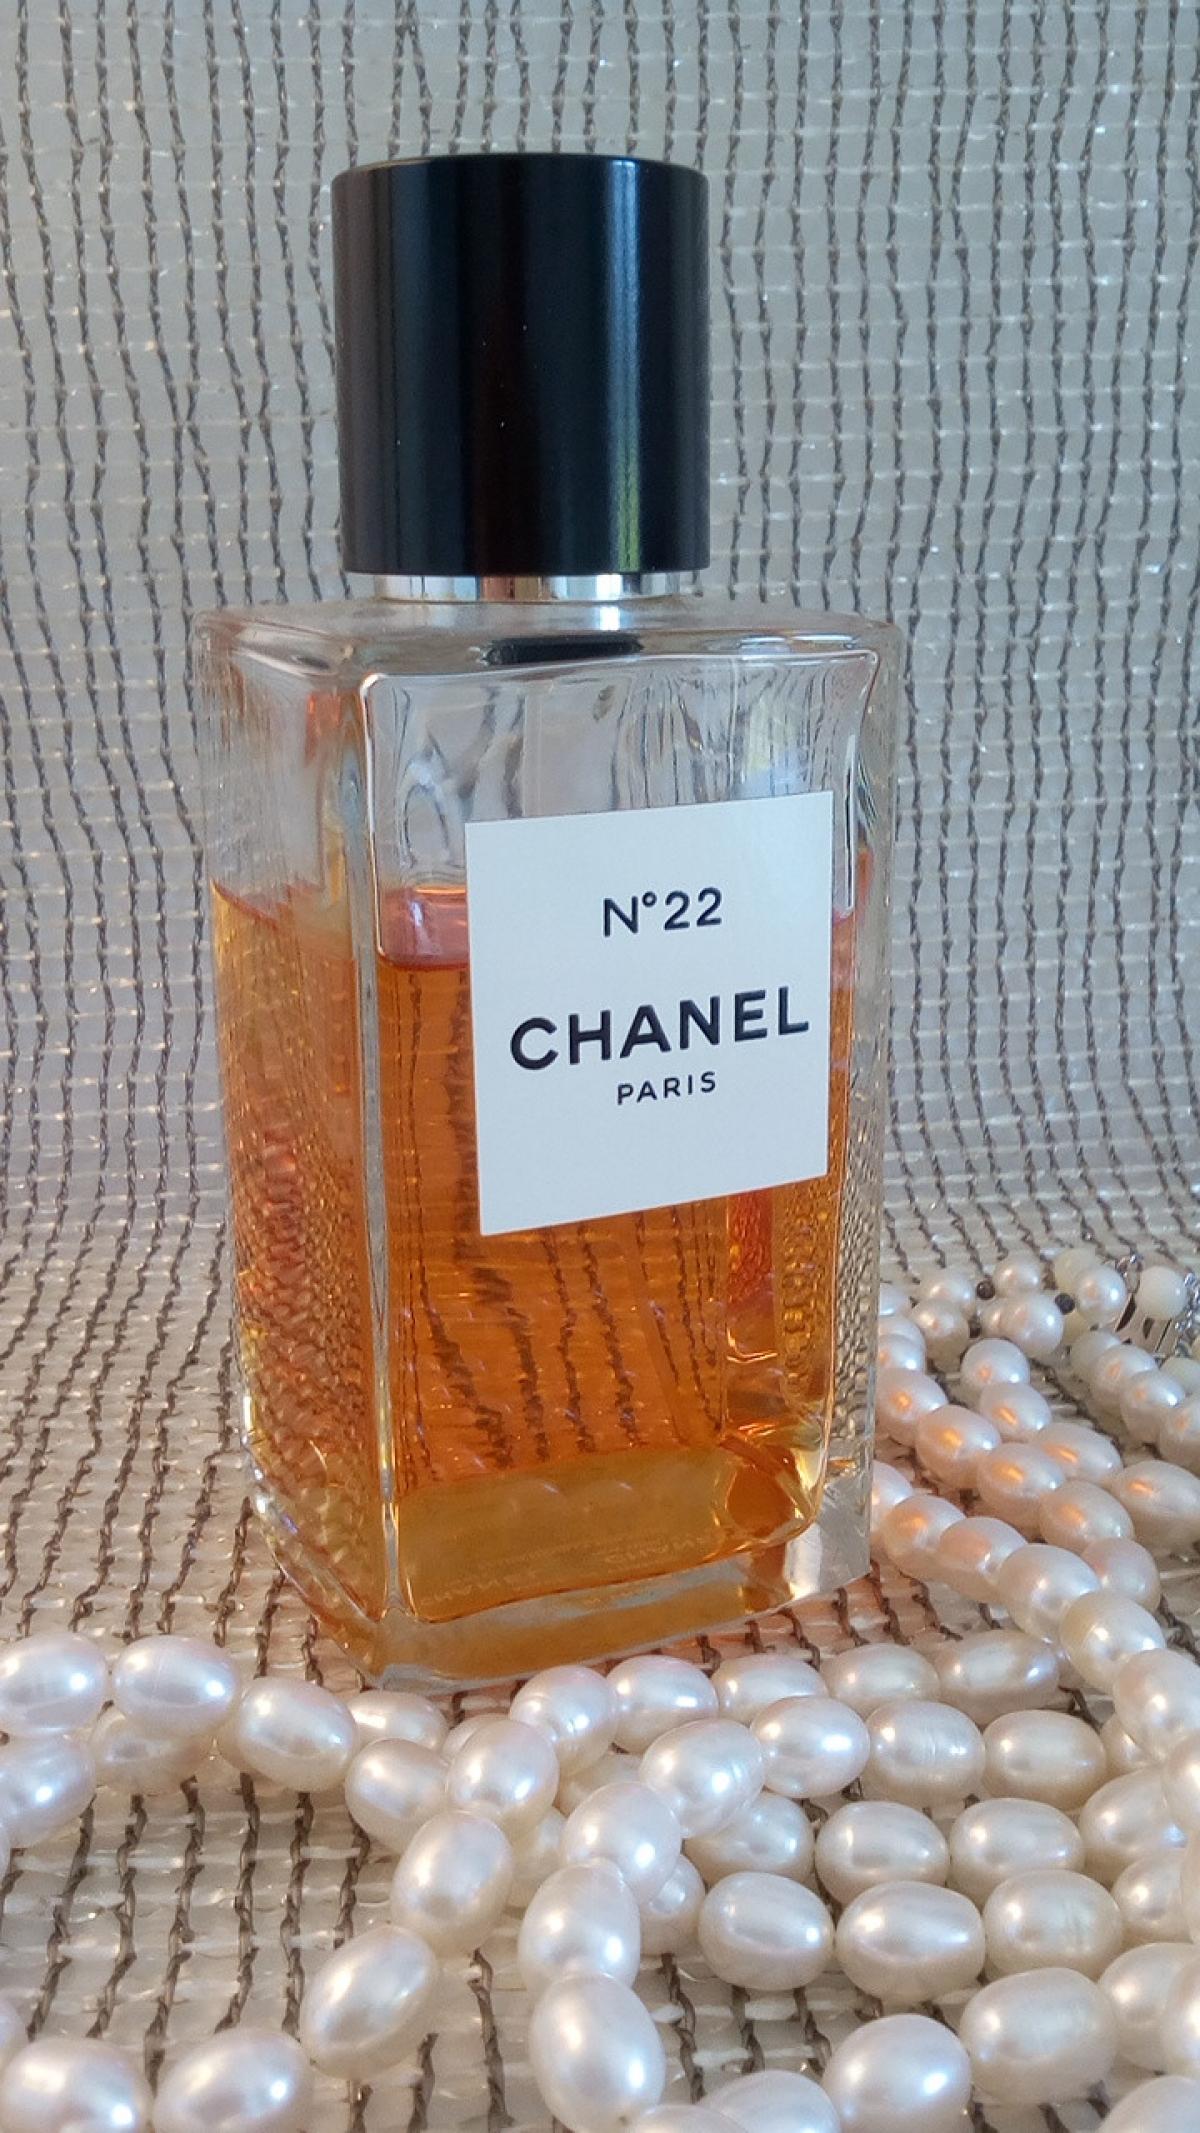 Les Exclusifs de Chanel No 22 Chanel аромат — аромат для женщин 1922